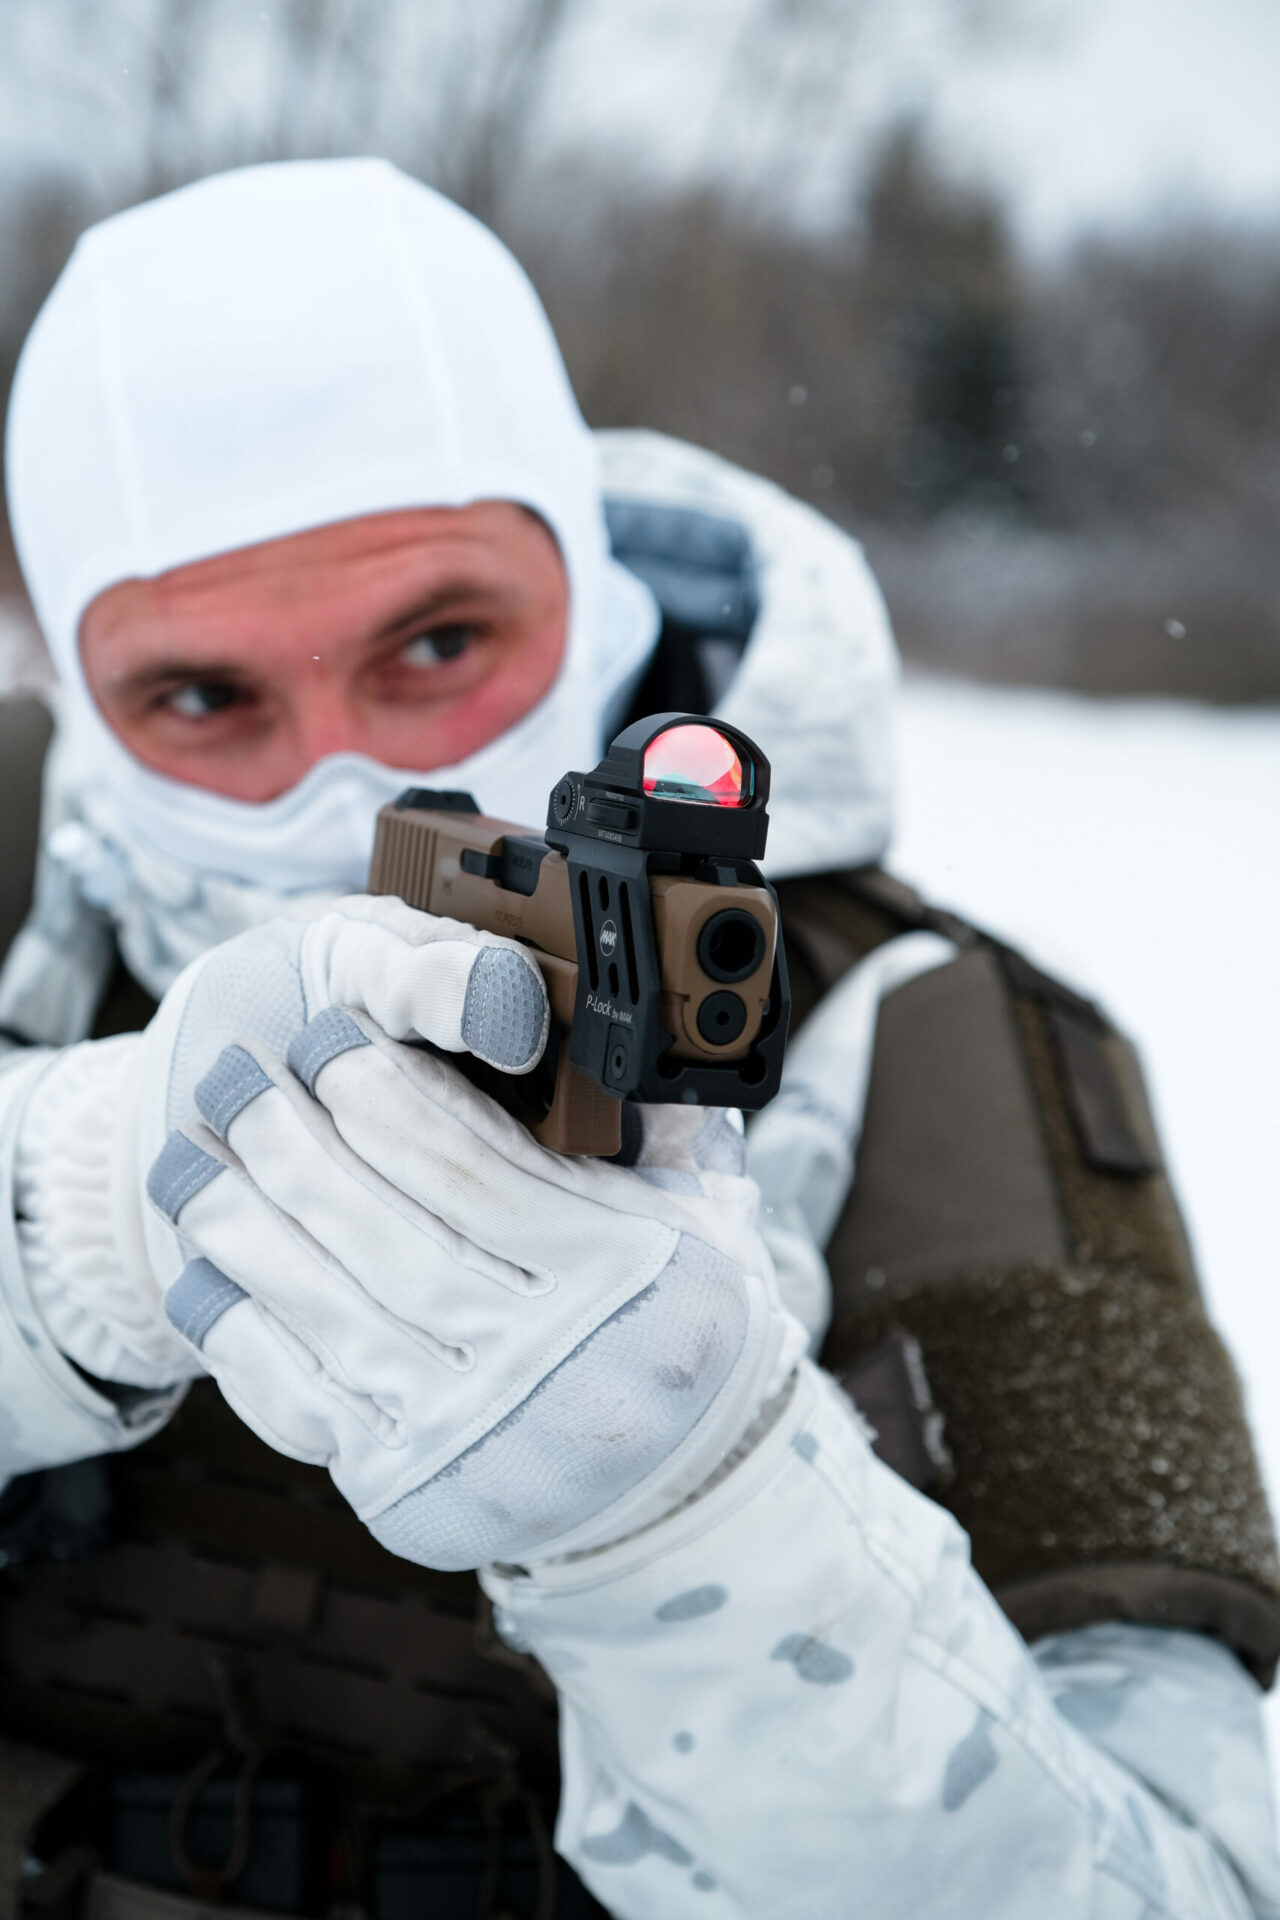 The innovative reflex sight mount for pistols MAK P-Lock